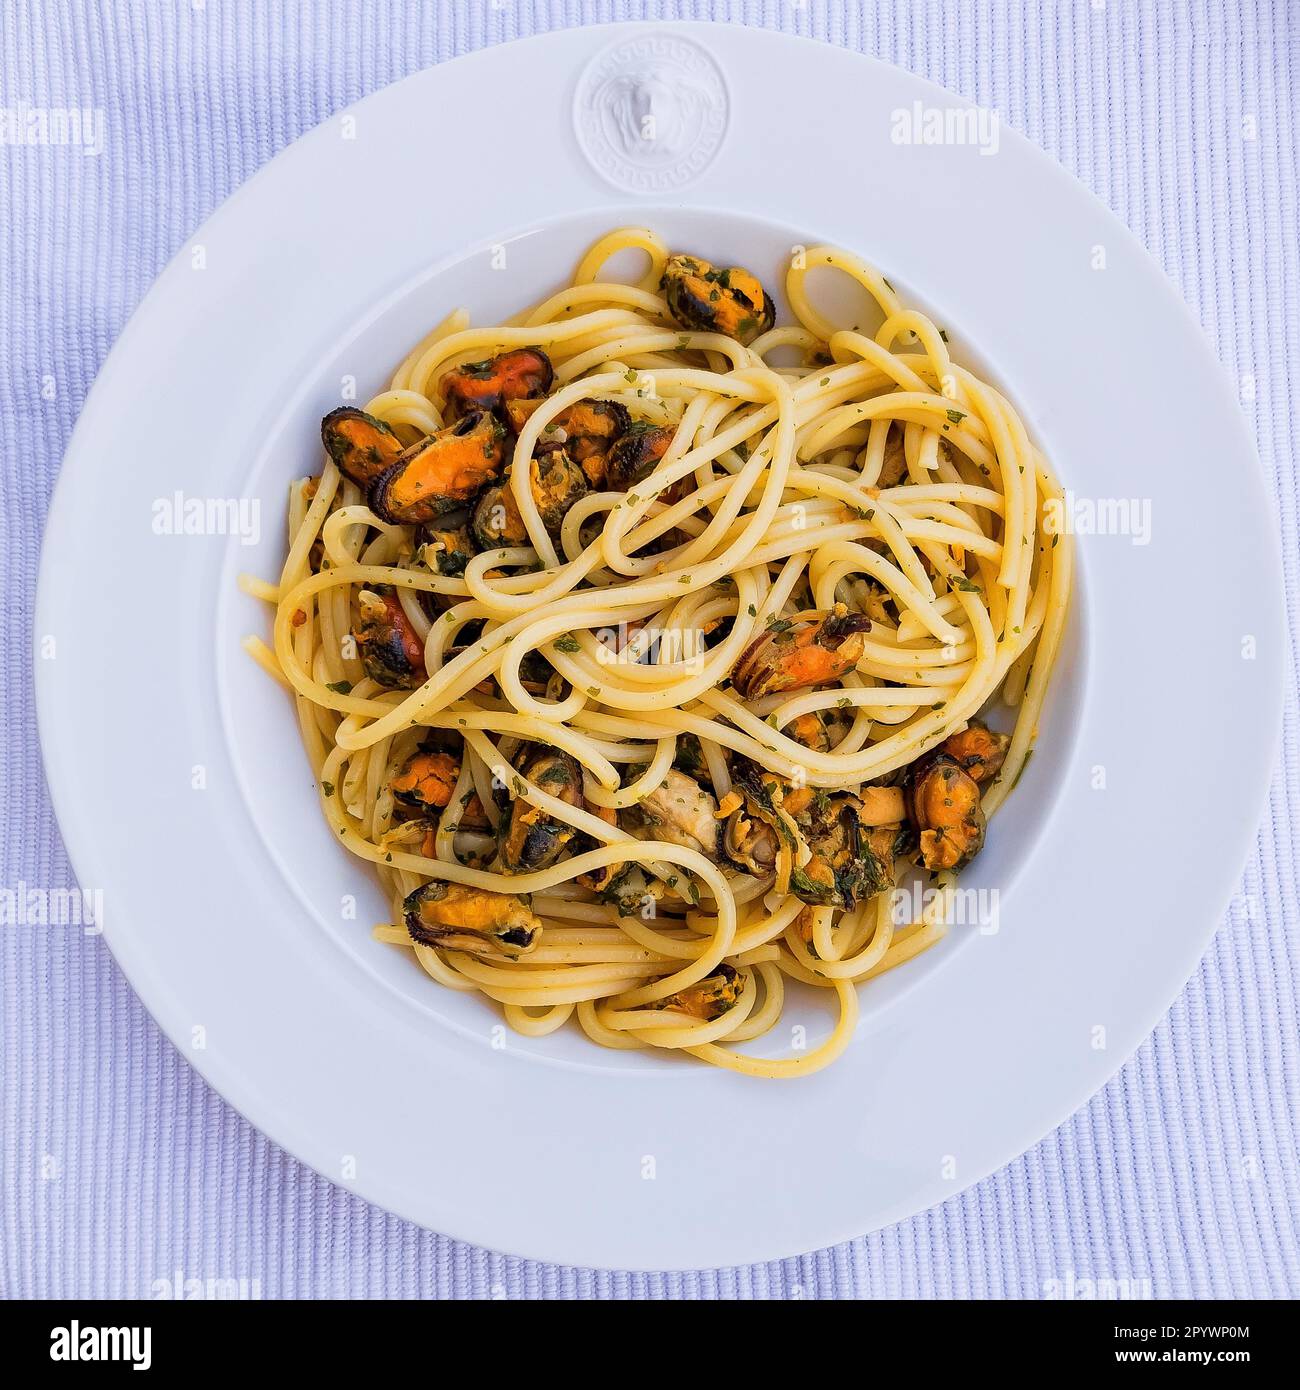 Italian dish from the Italian cuisine Spaghetti with clams Vongole, Italy Stock Photo